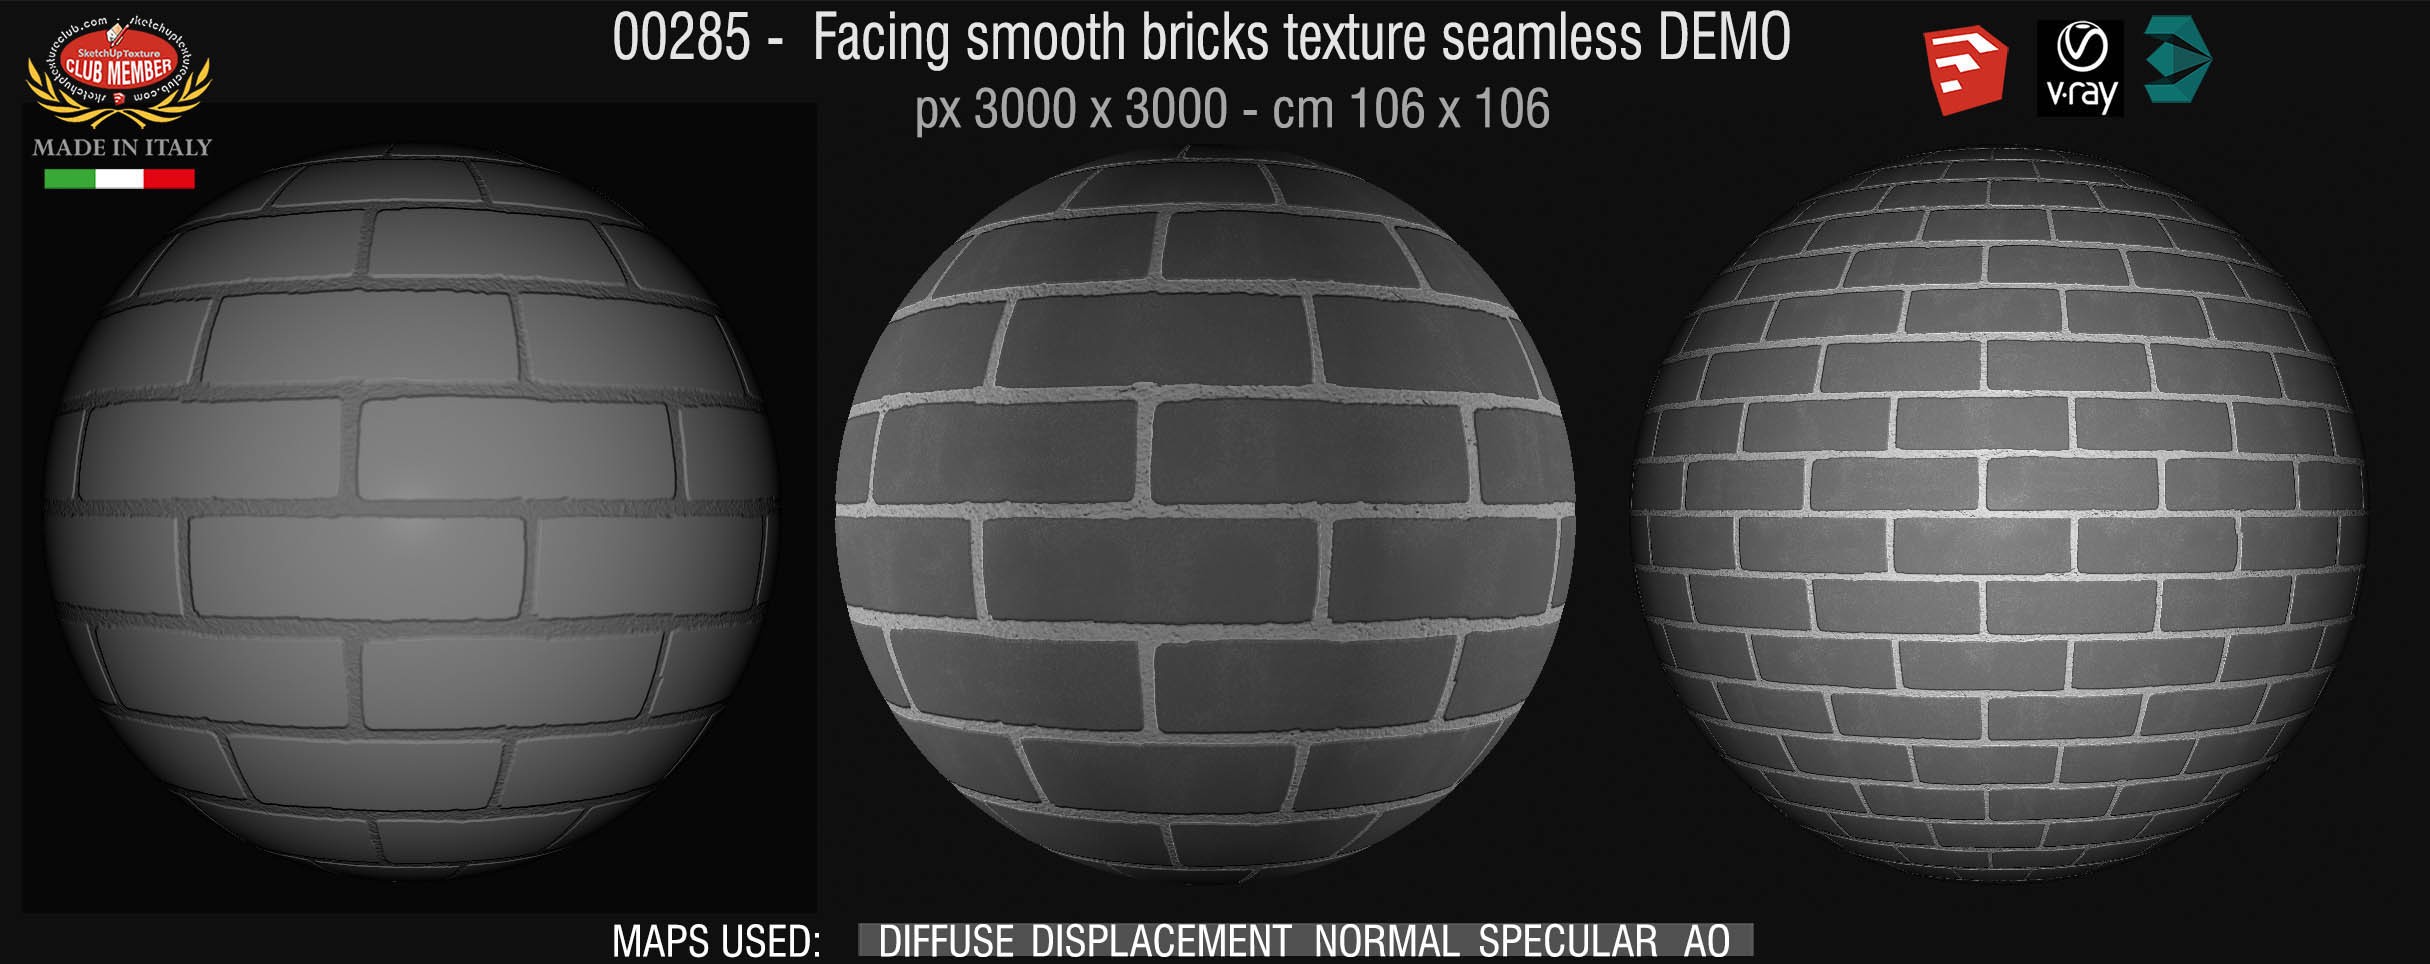 00285 Facing smooth bricks texture seamless + maps DEMO